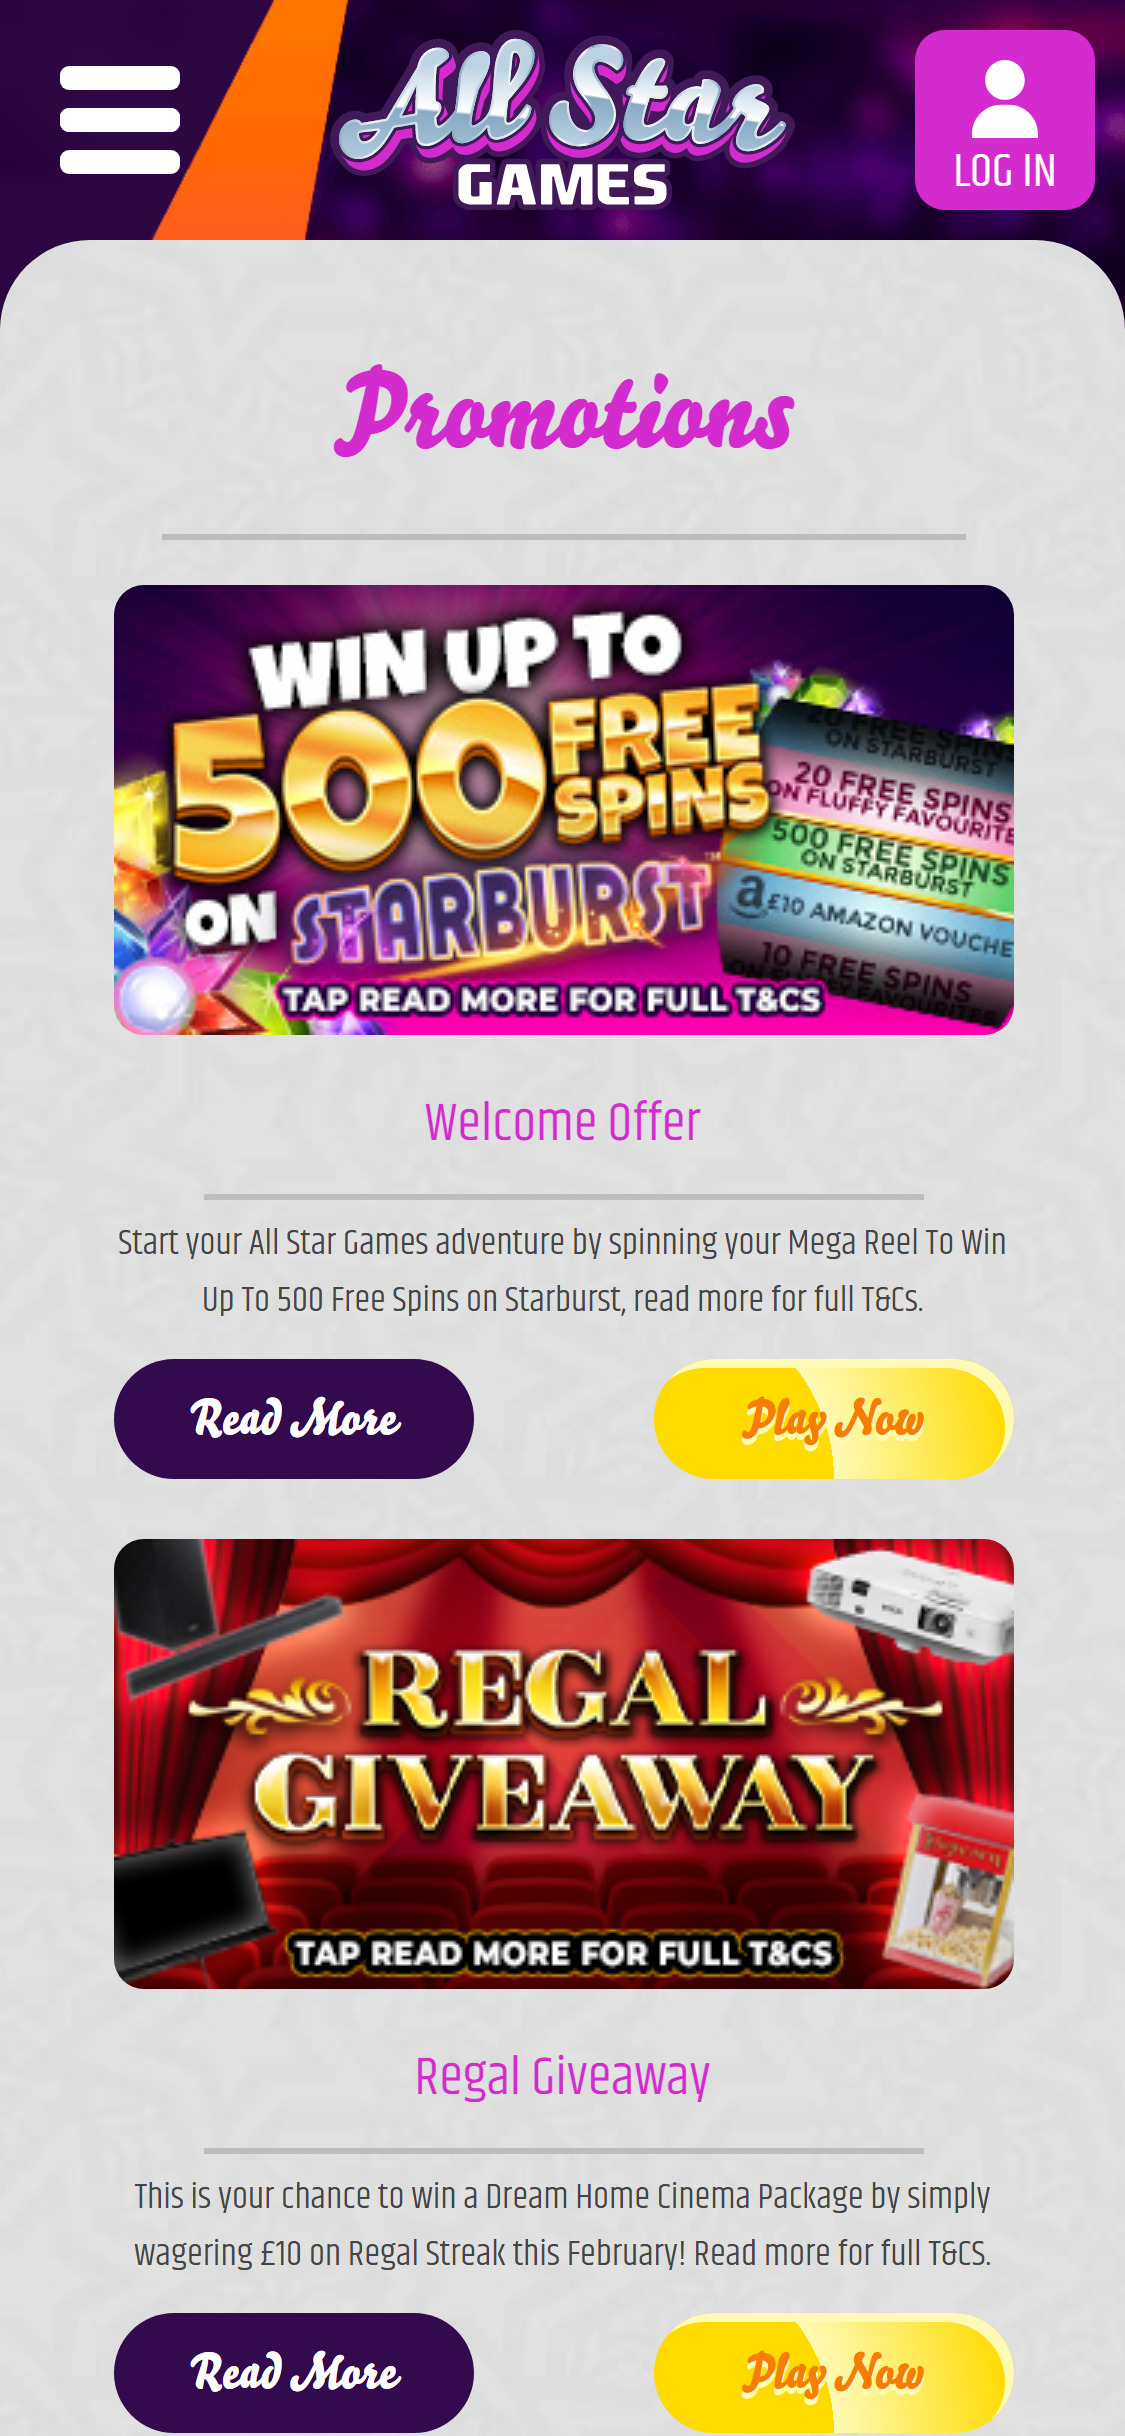 All Star Games Casino Mobile No Deposit Bonus Review